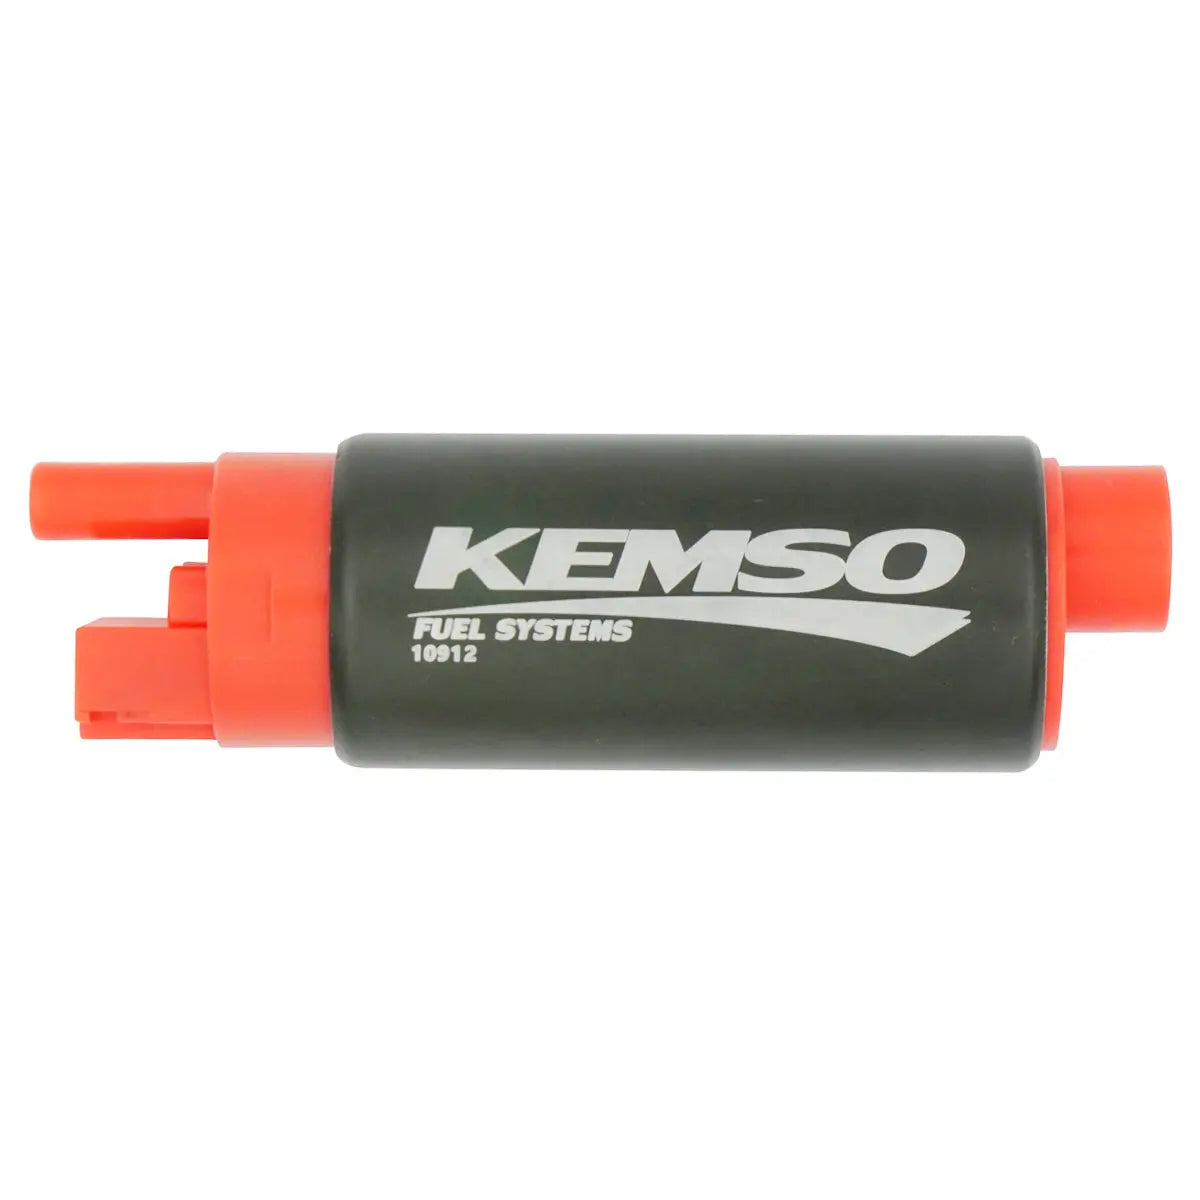 KEMSO 340LPH High Performance Fuel Pump for Chevrolet K1500 Pickup 4x4 1988-1997 - KEMSO